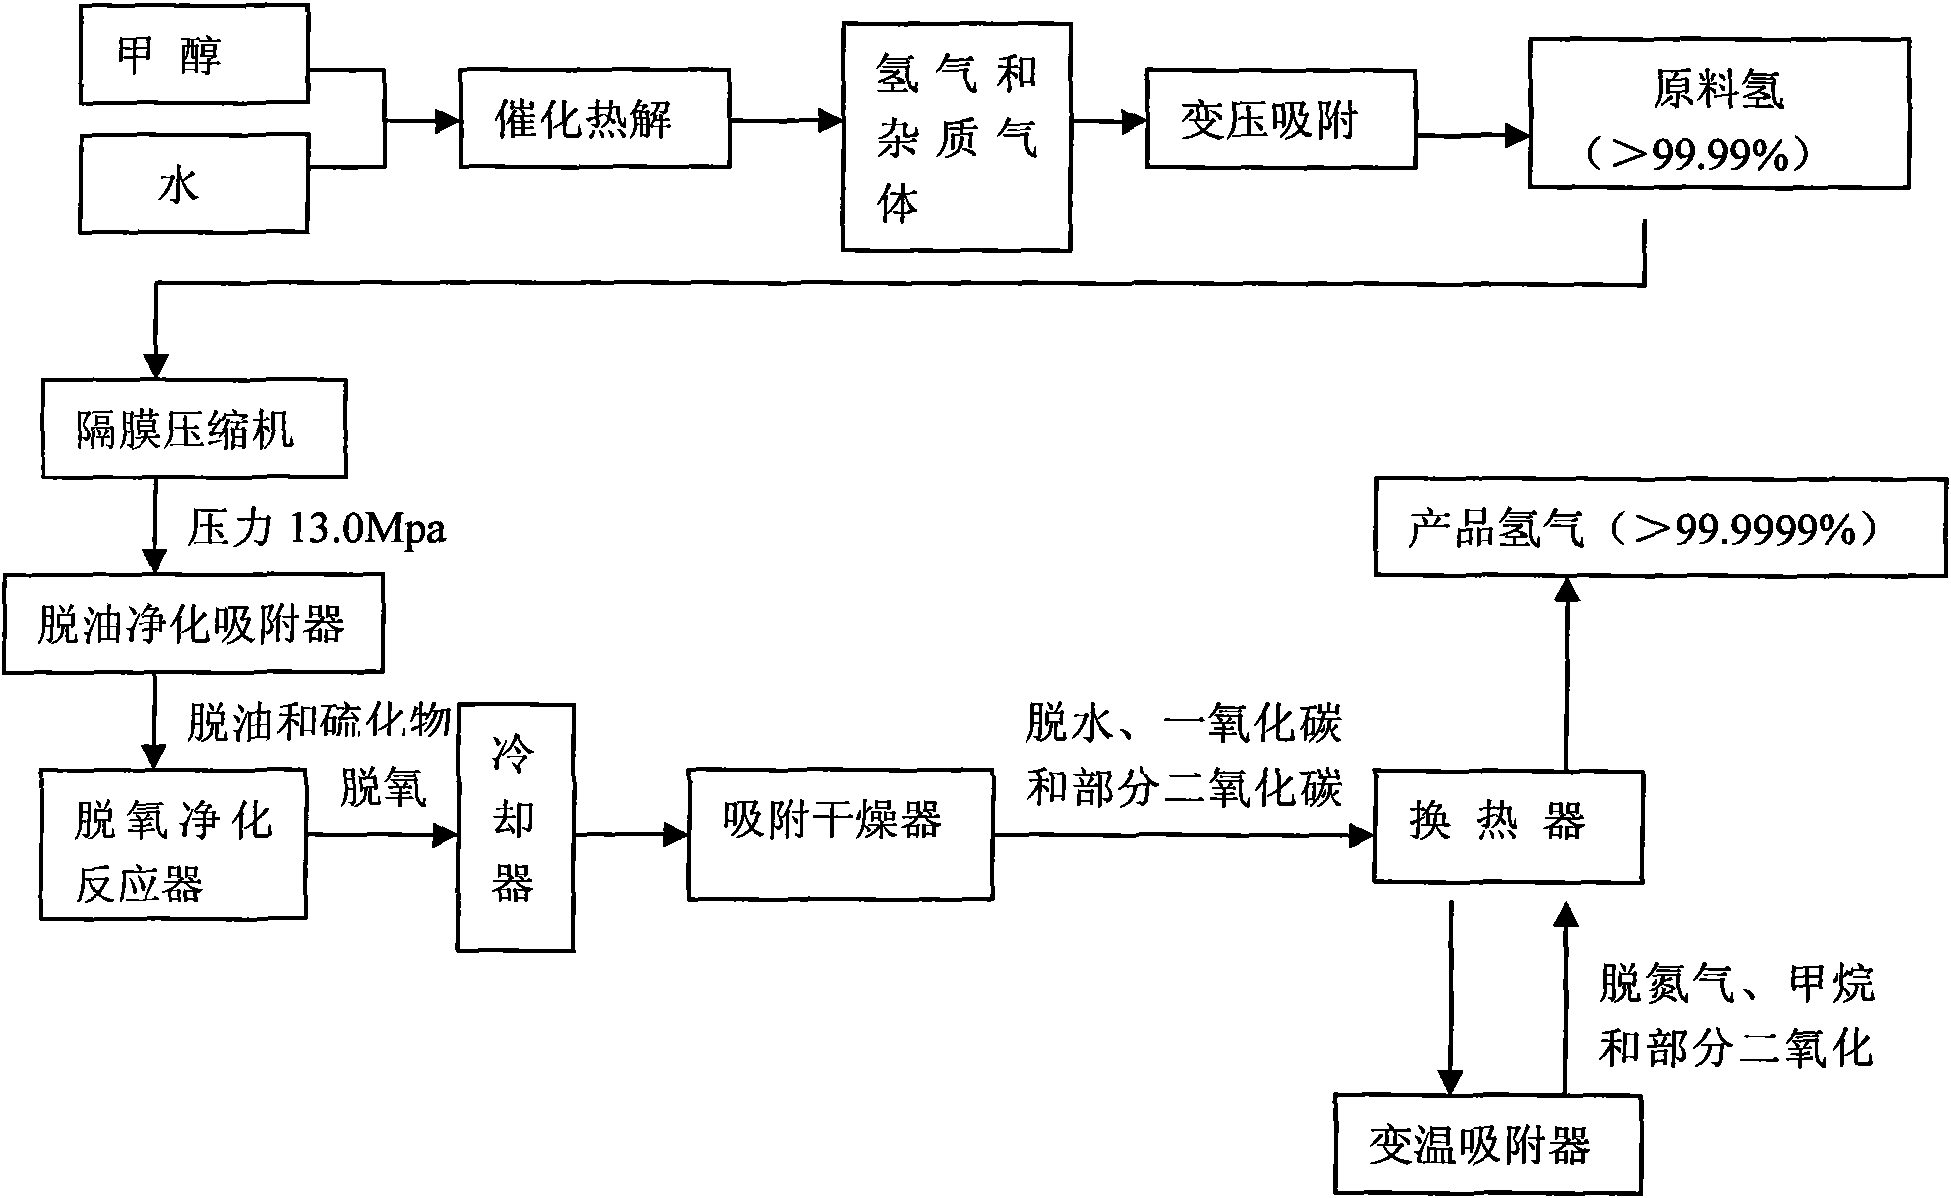 Preparation method of high purity hydrogen